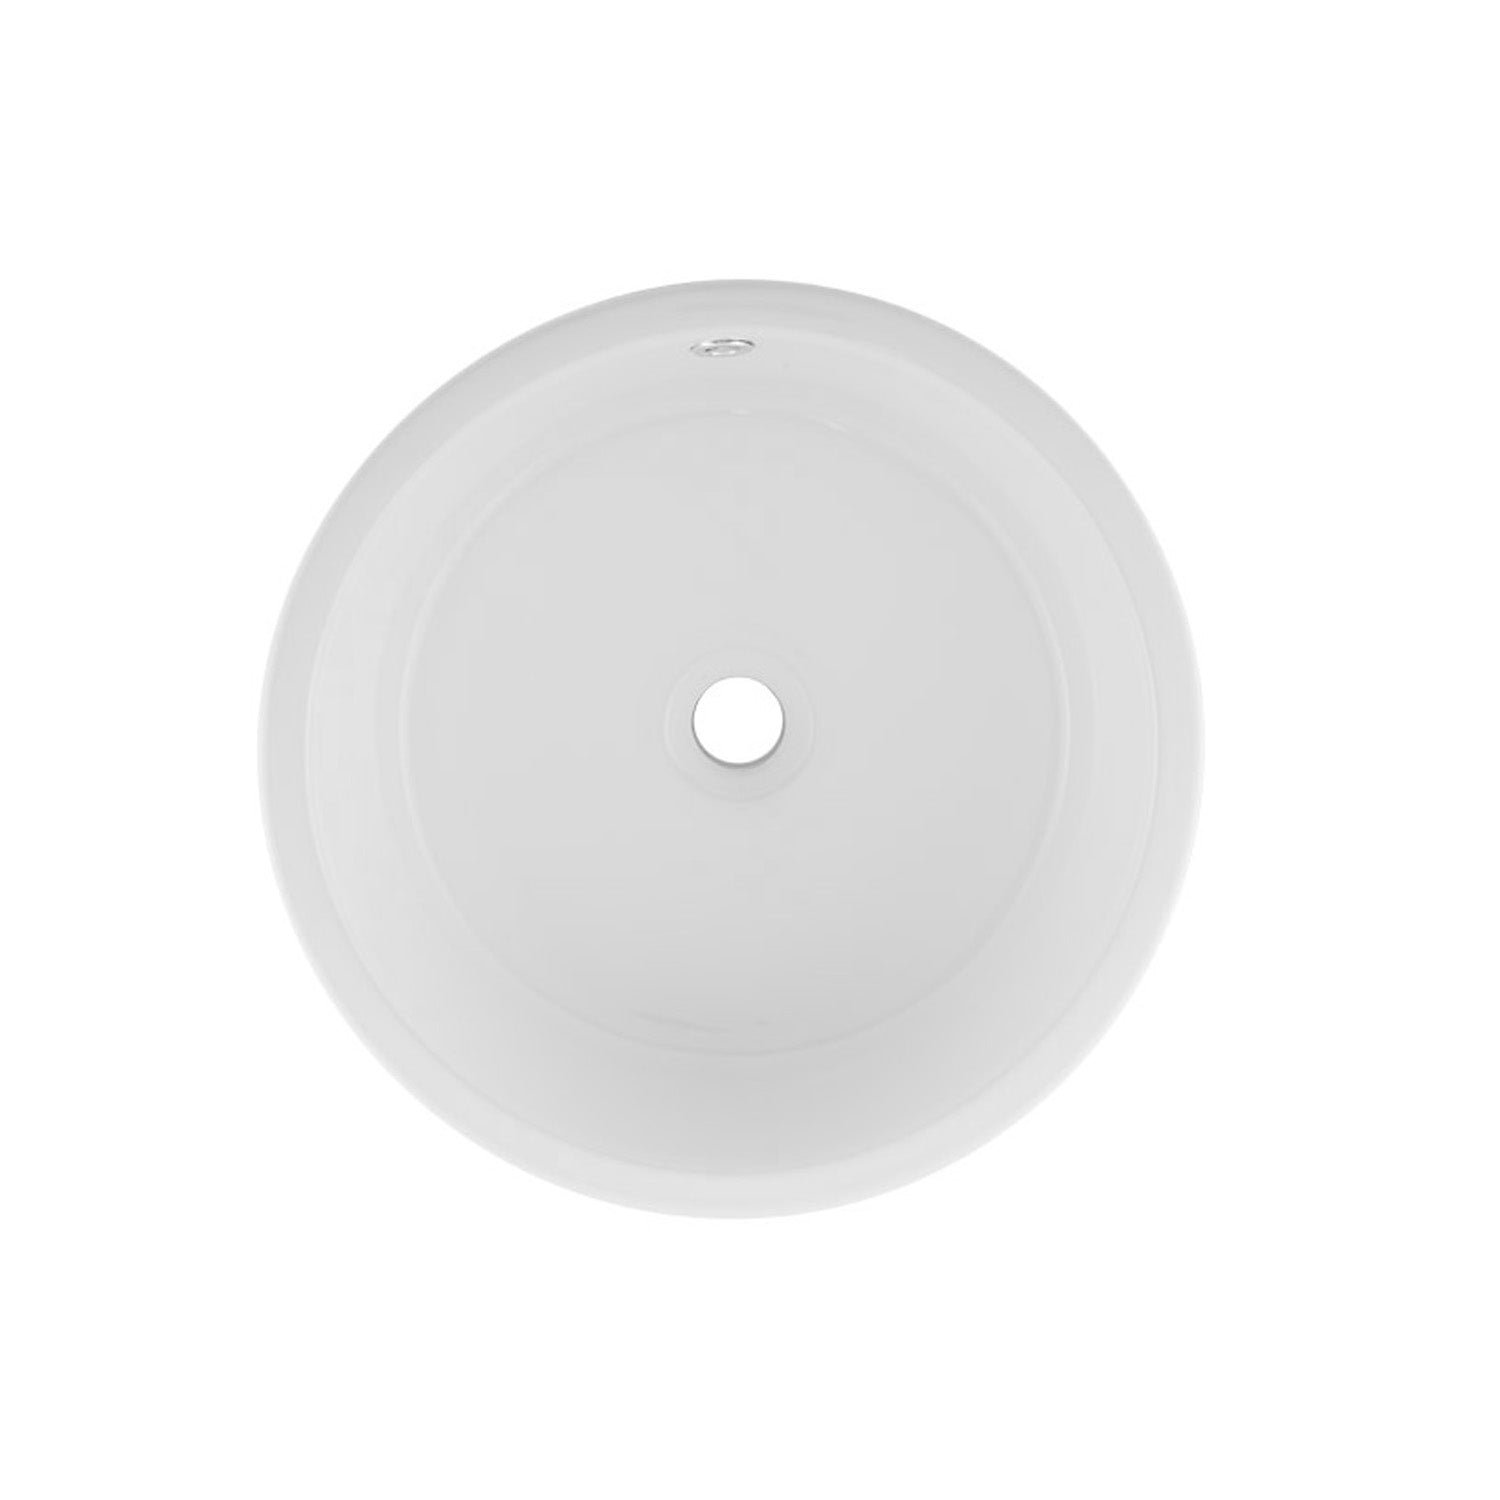 Lavabo redondo de cerámica para baño de un solo tazón DAX, acabado blanco, 16-1/2 x 4-1/2 pulgadas (BSN-218)